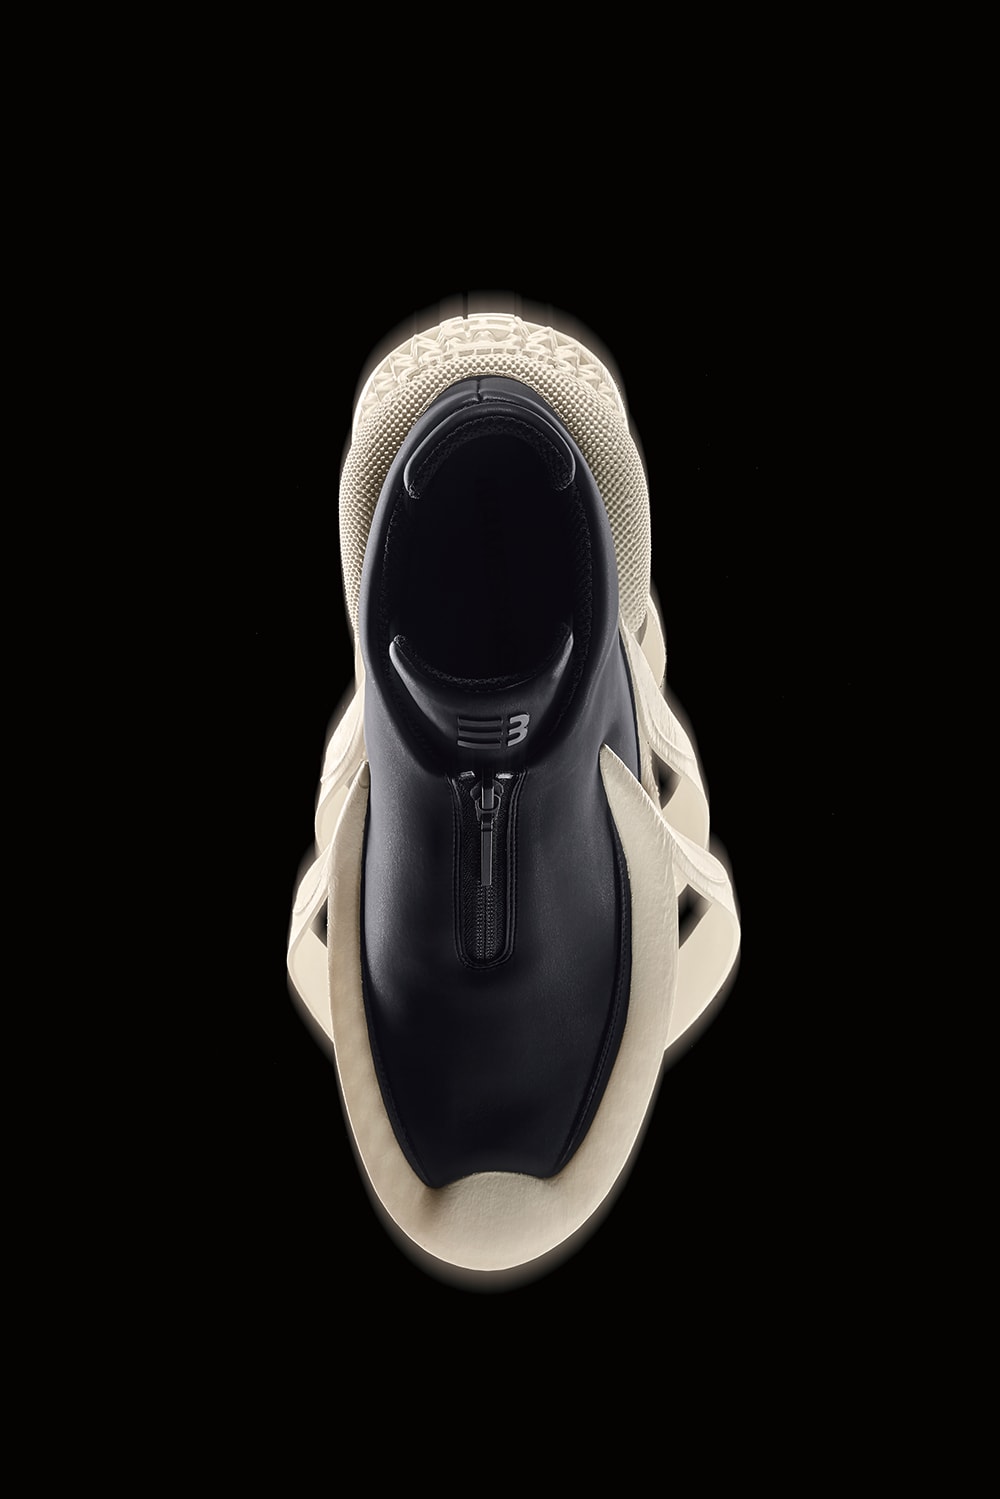 NAMESAKE 首雙 3D 打印鞋款系列「CLIPPERS」正式上架